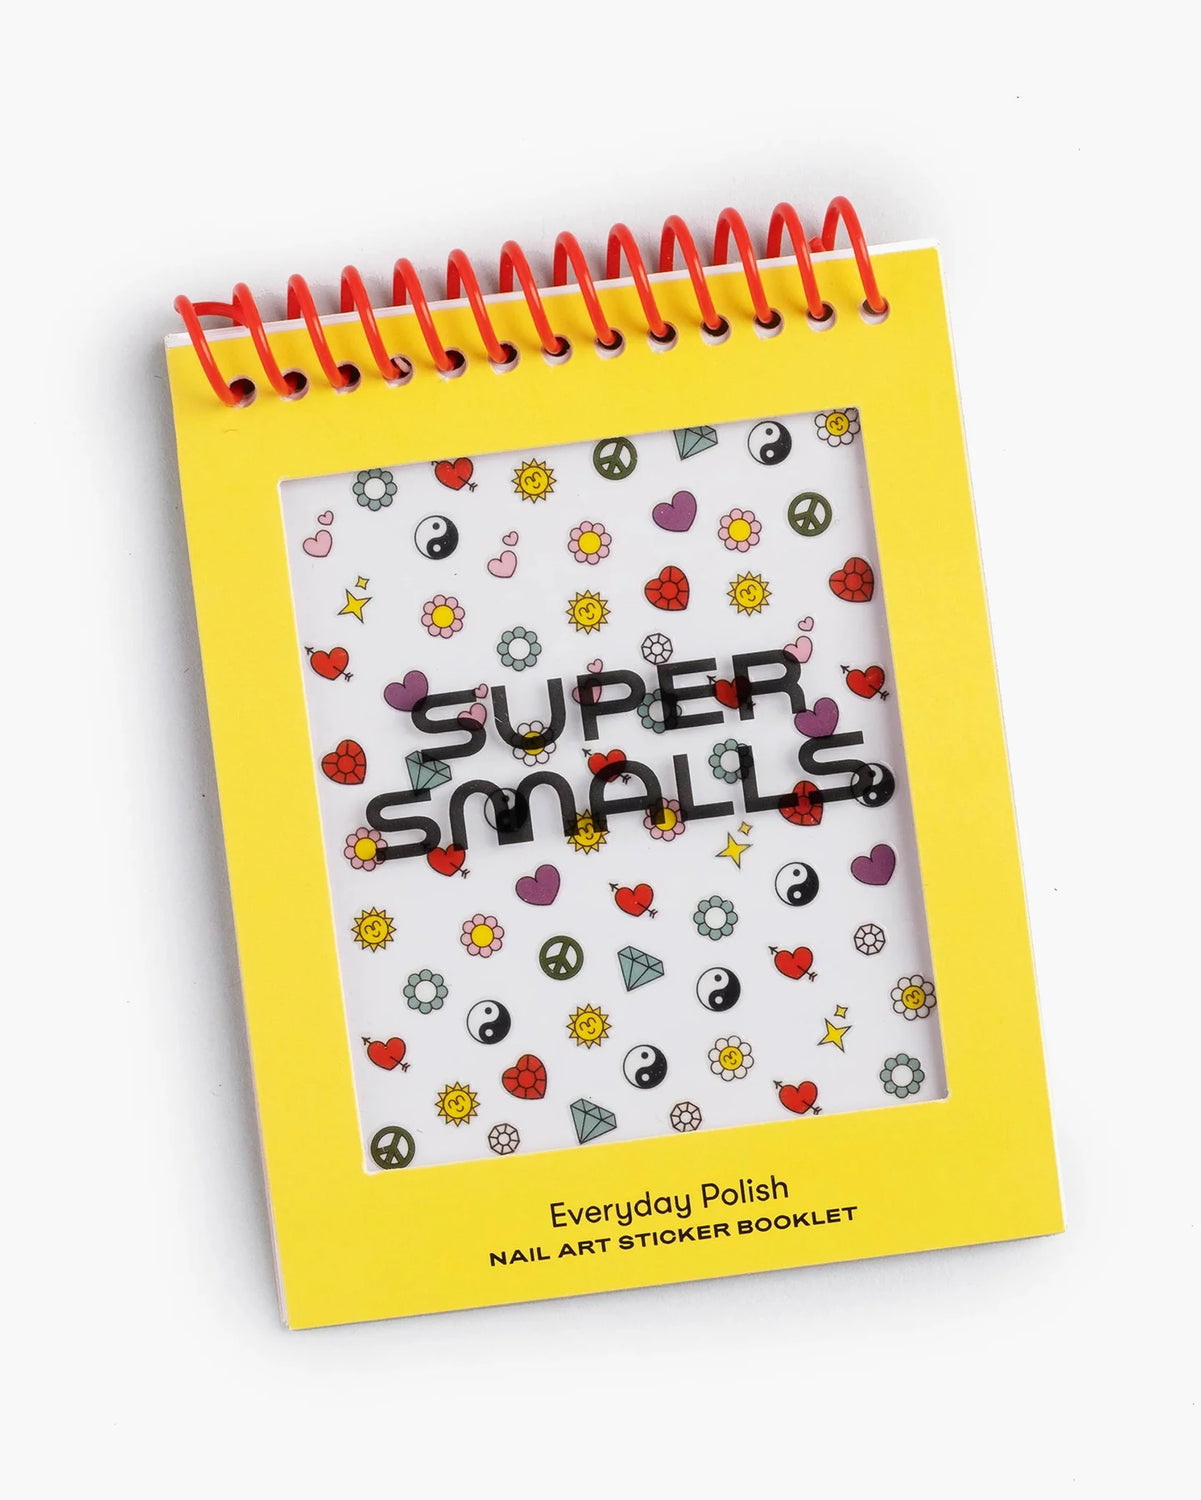 Super Smalls - Everyday Polish Nail Art Sticker Booklet